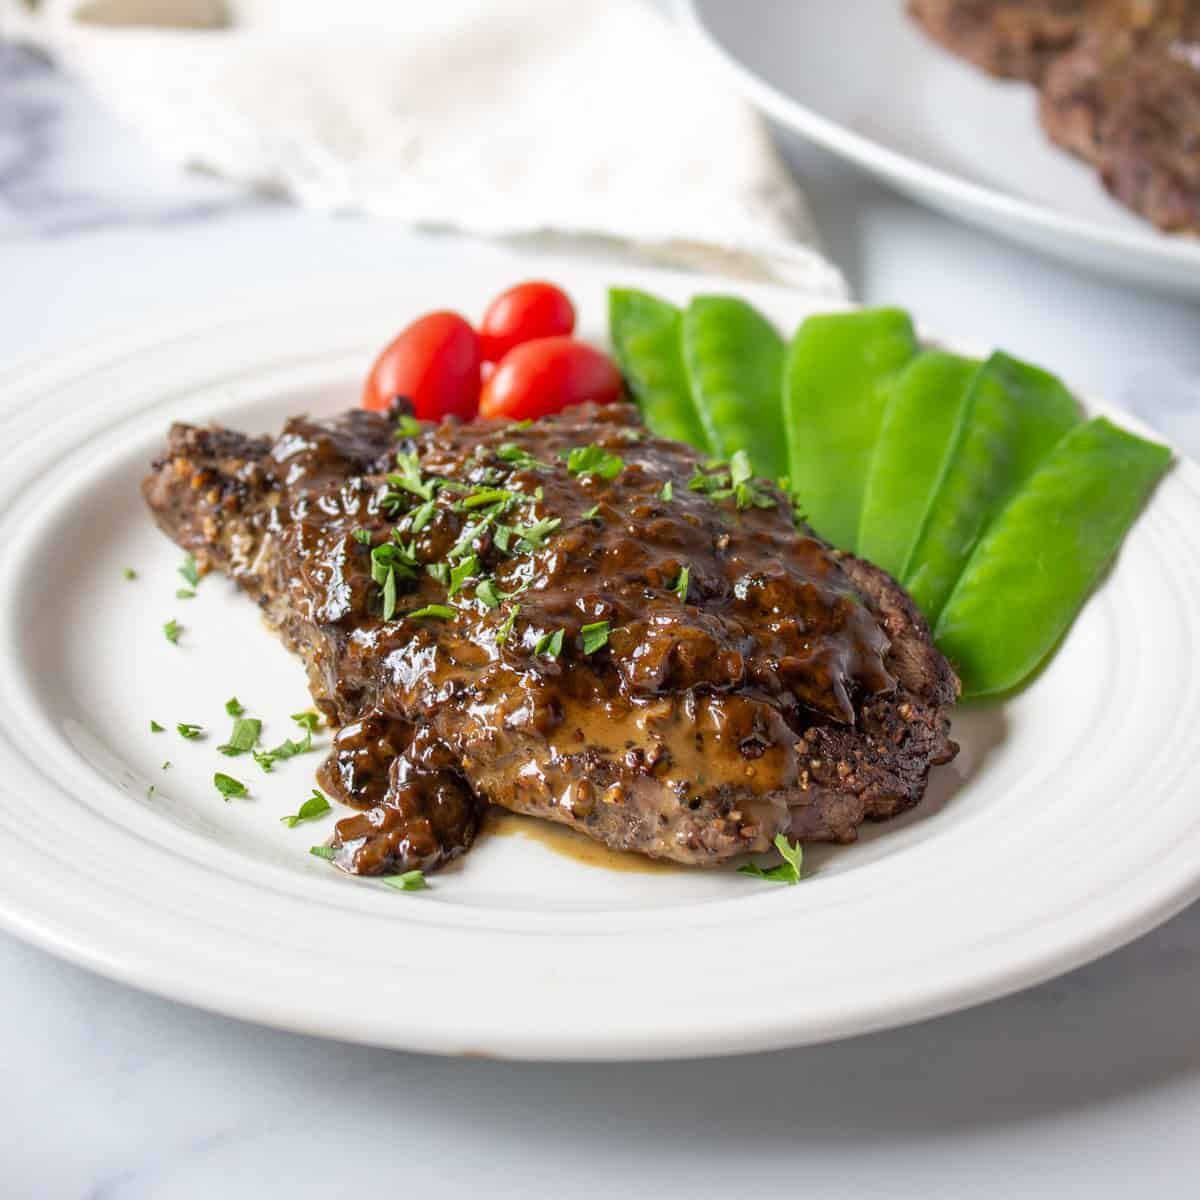 Juicy elk steak au poivre with veggies on a white plate.